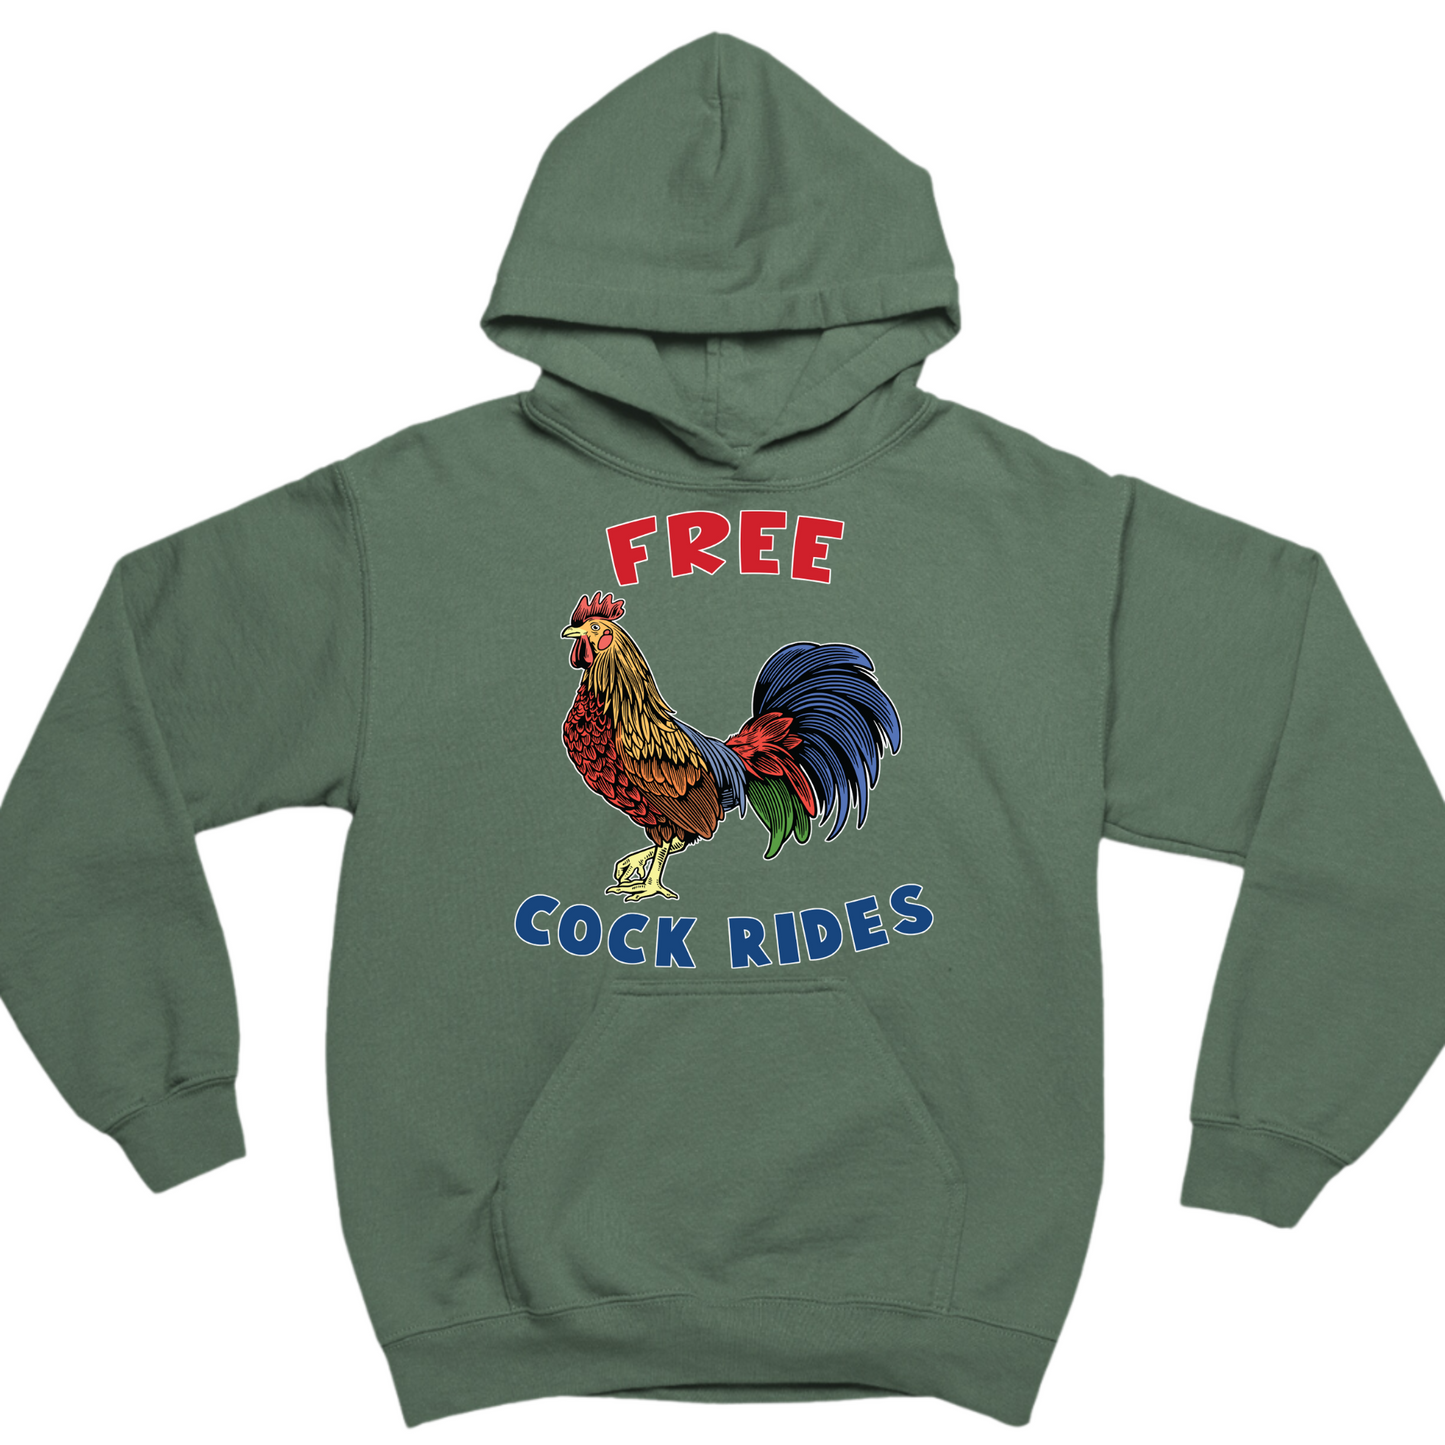 Free Cock Rides Hoodie